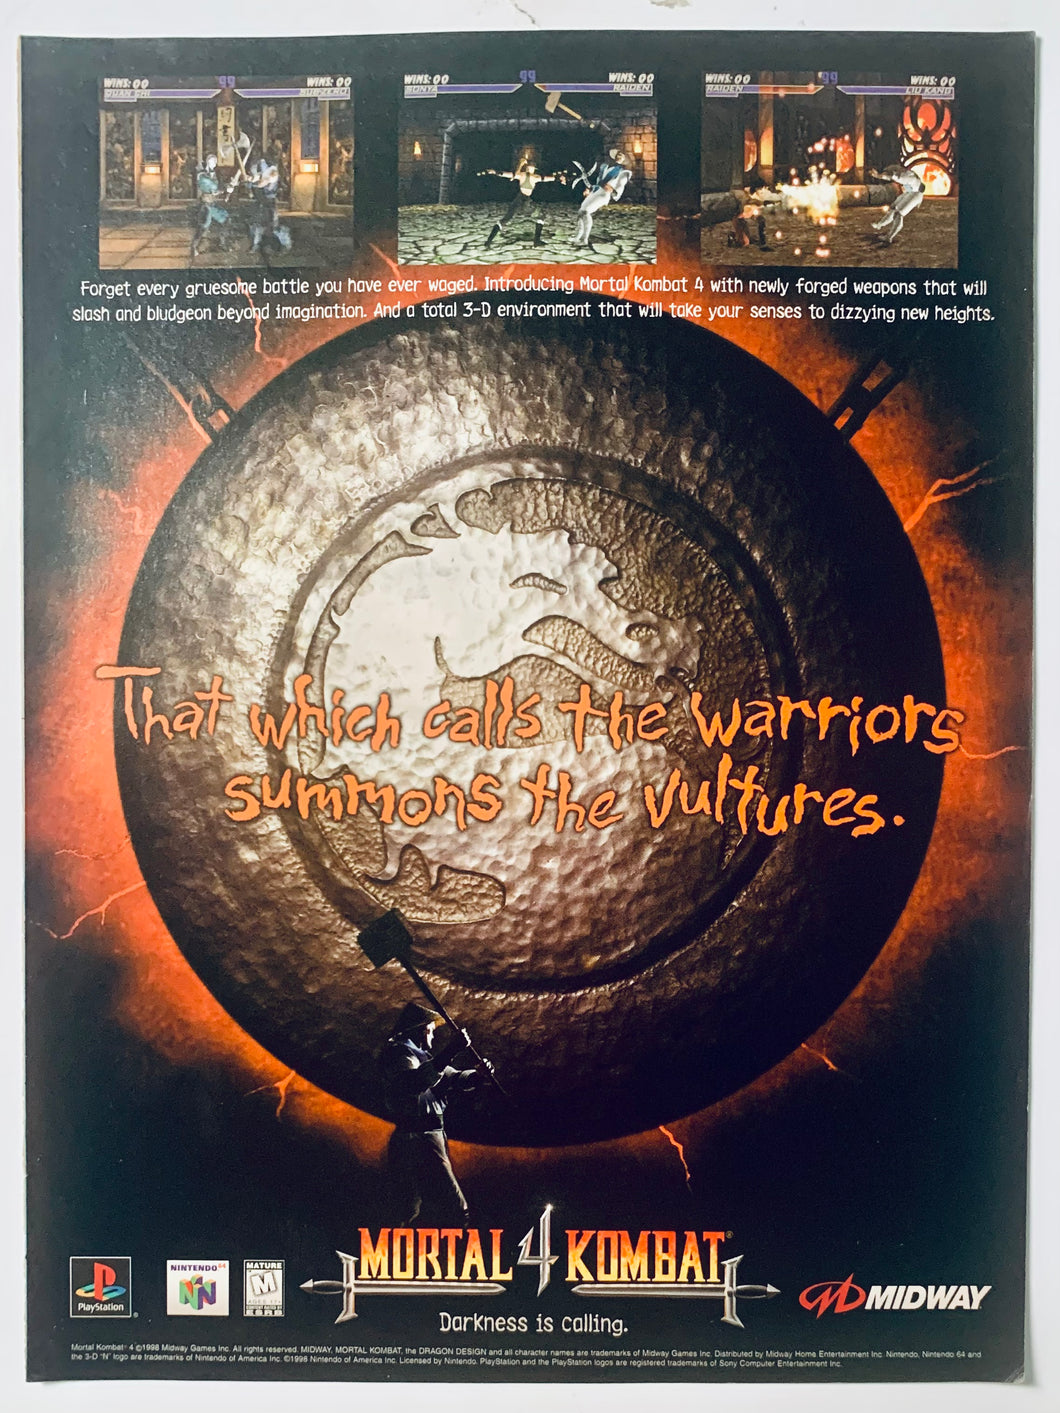 Mortal Kombat 4 - PlayStation N64 - Original Vintage Advertisement - Print Ads - Laminated A4 Poster